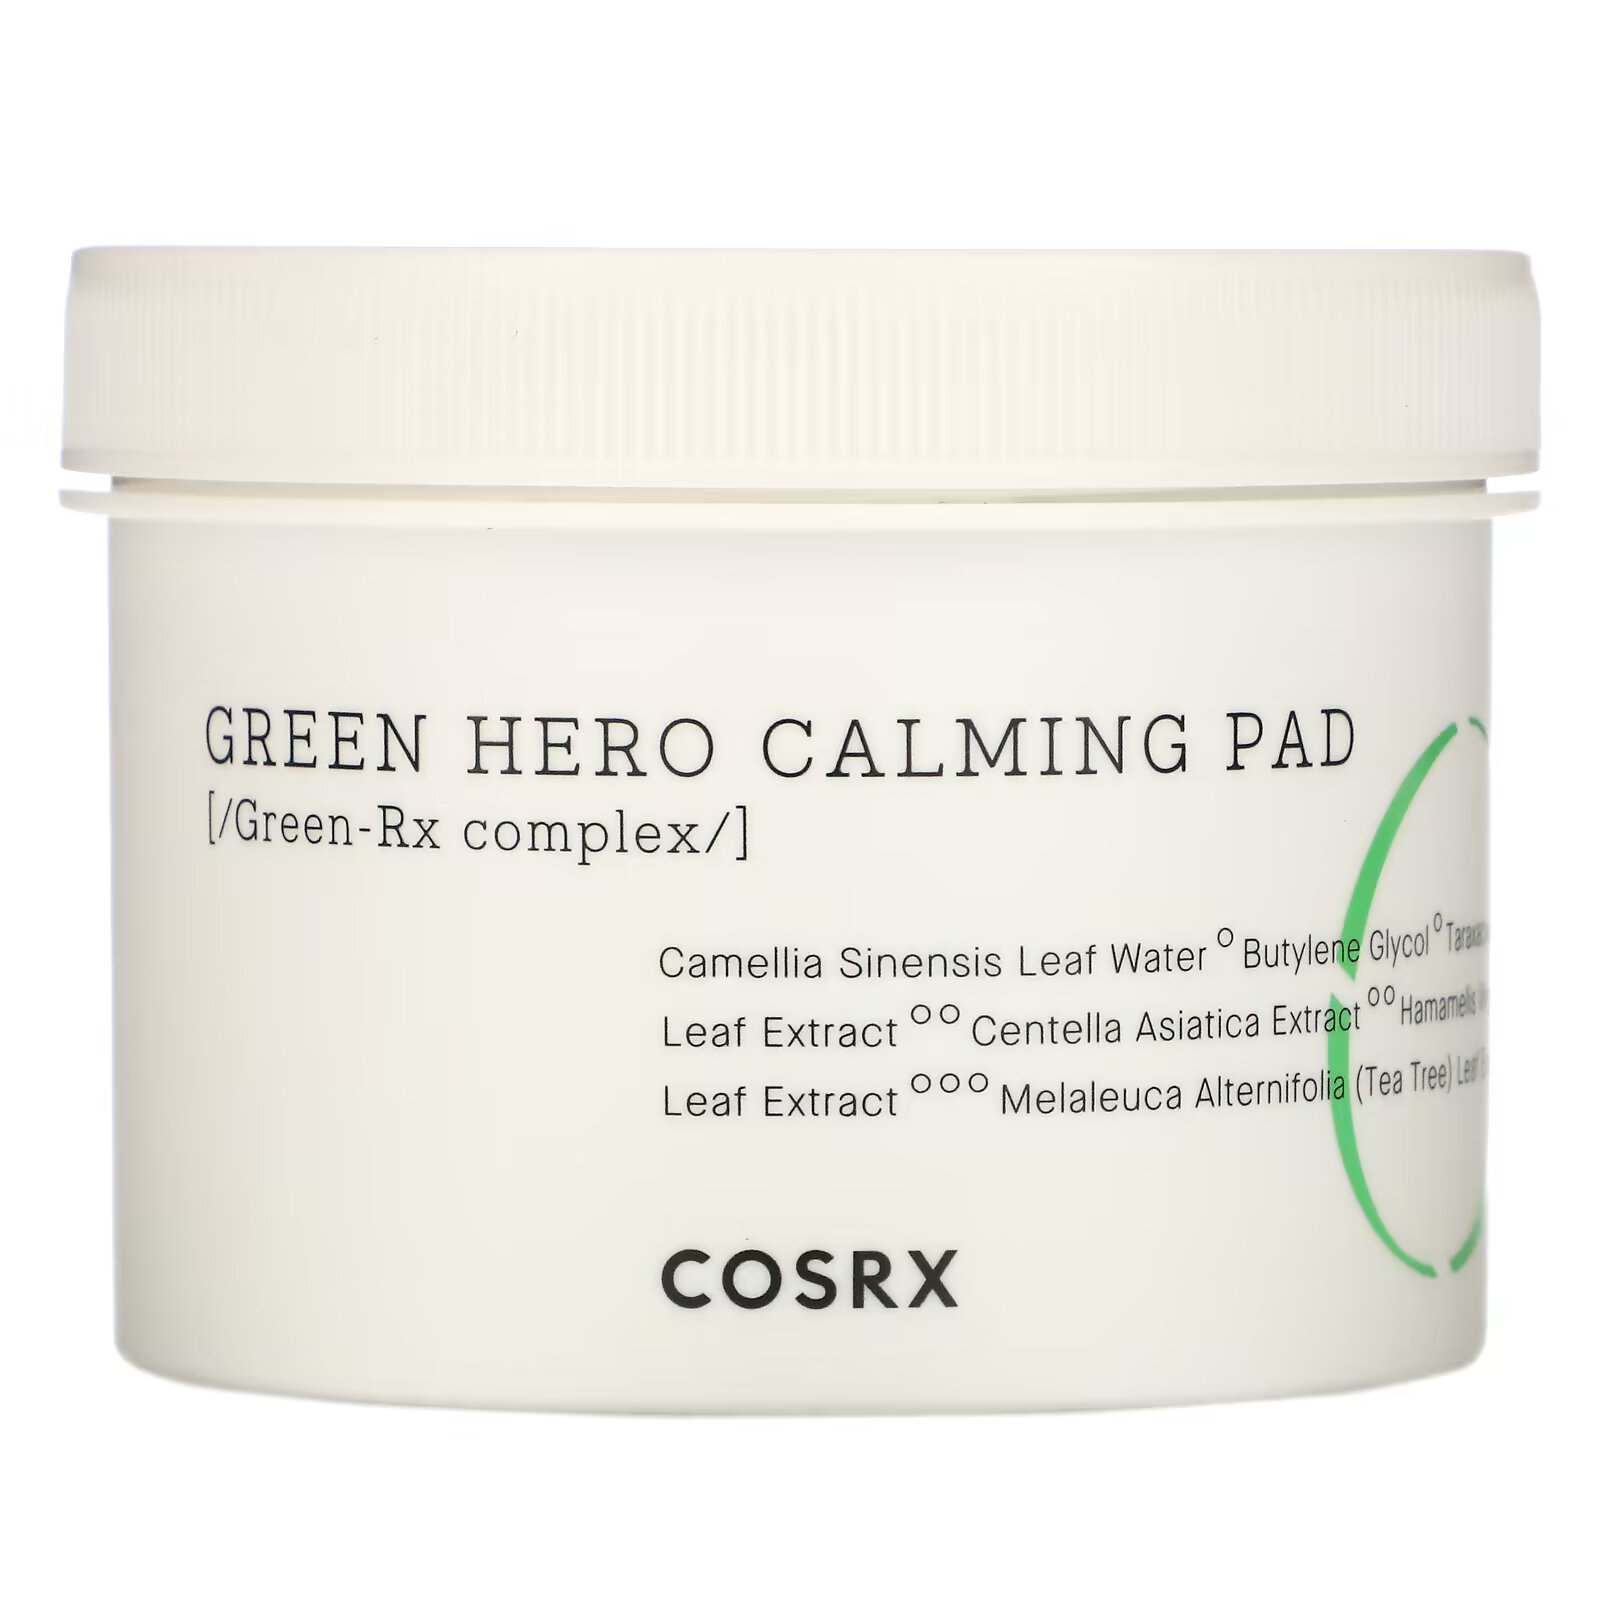 Cosrx, One Step Green Hero Calming Pad, успокаивающие диски, 70 шт., 135 мл (4,56 жидк. унции) cosrx one step green hero calming pad успокаивающие диски 70 шт 135 мл 4 56 жидк унции